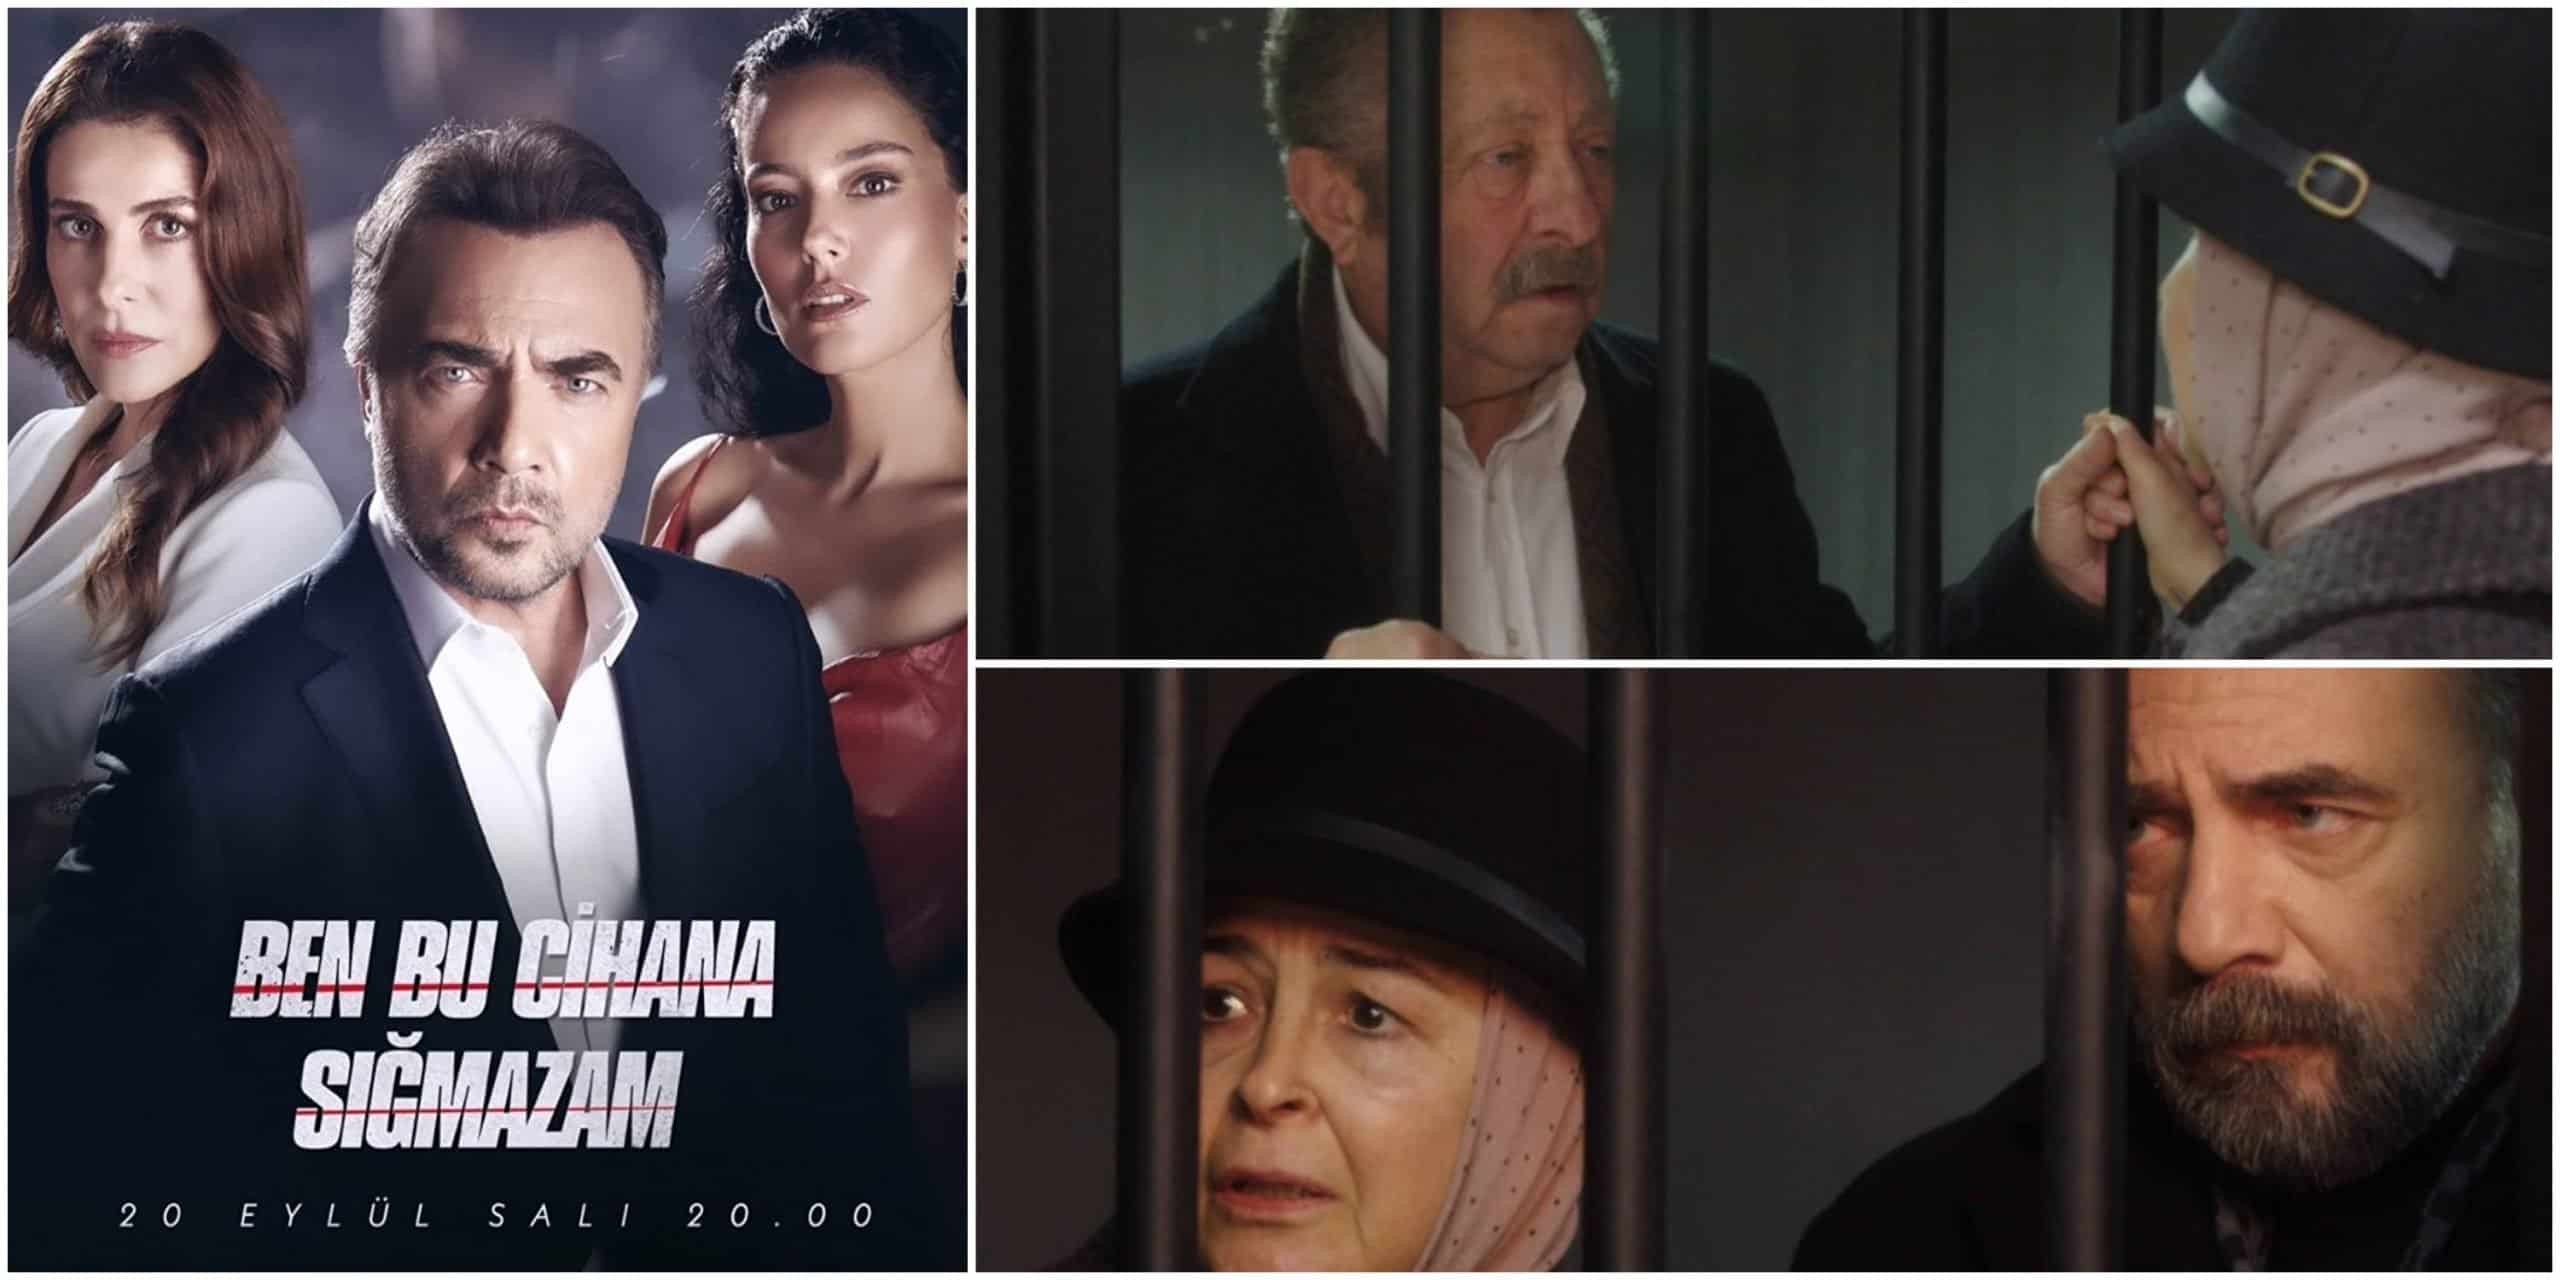 Ben Bu Cihana Sığmazam Turkish Series Episode 21 Release Date